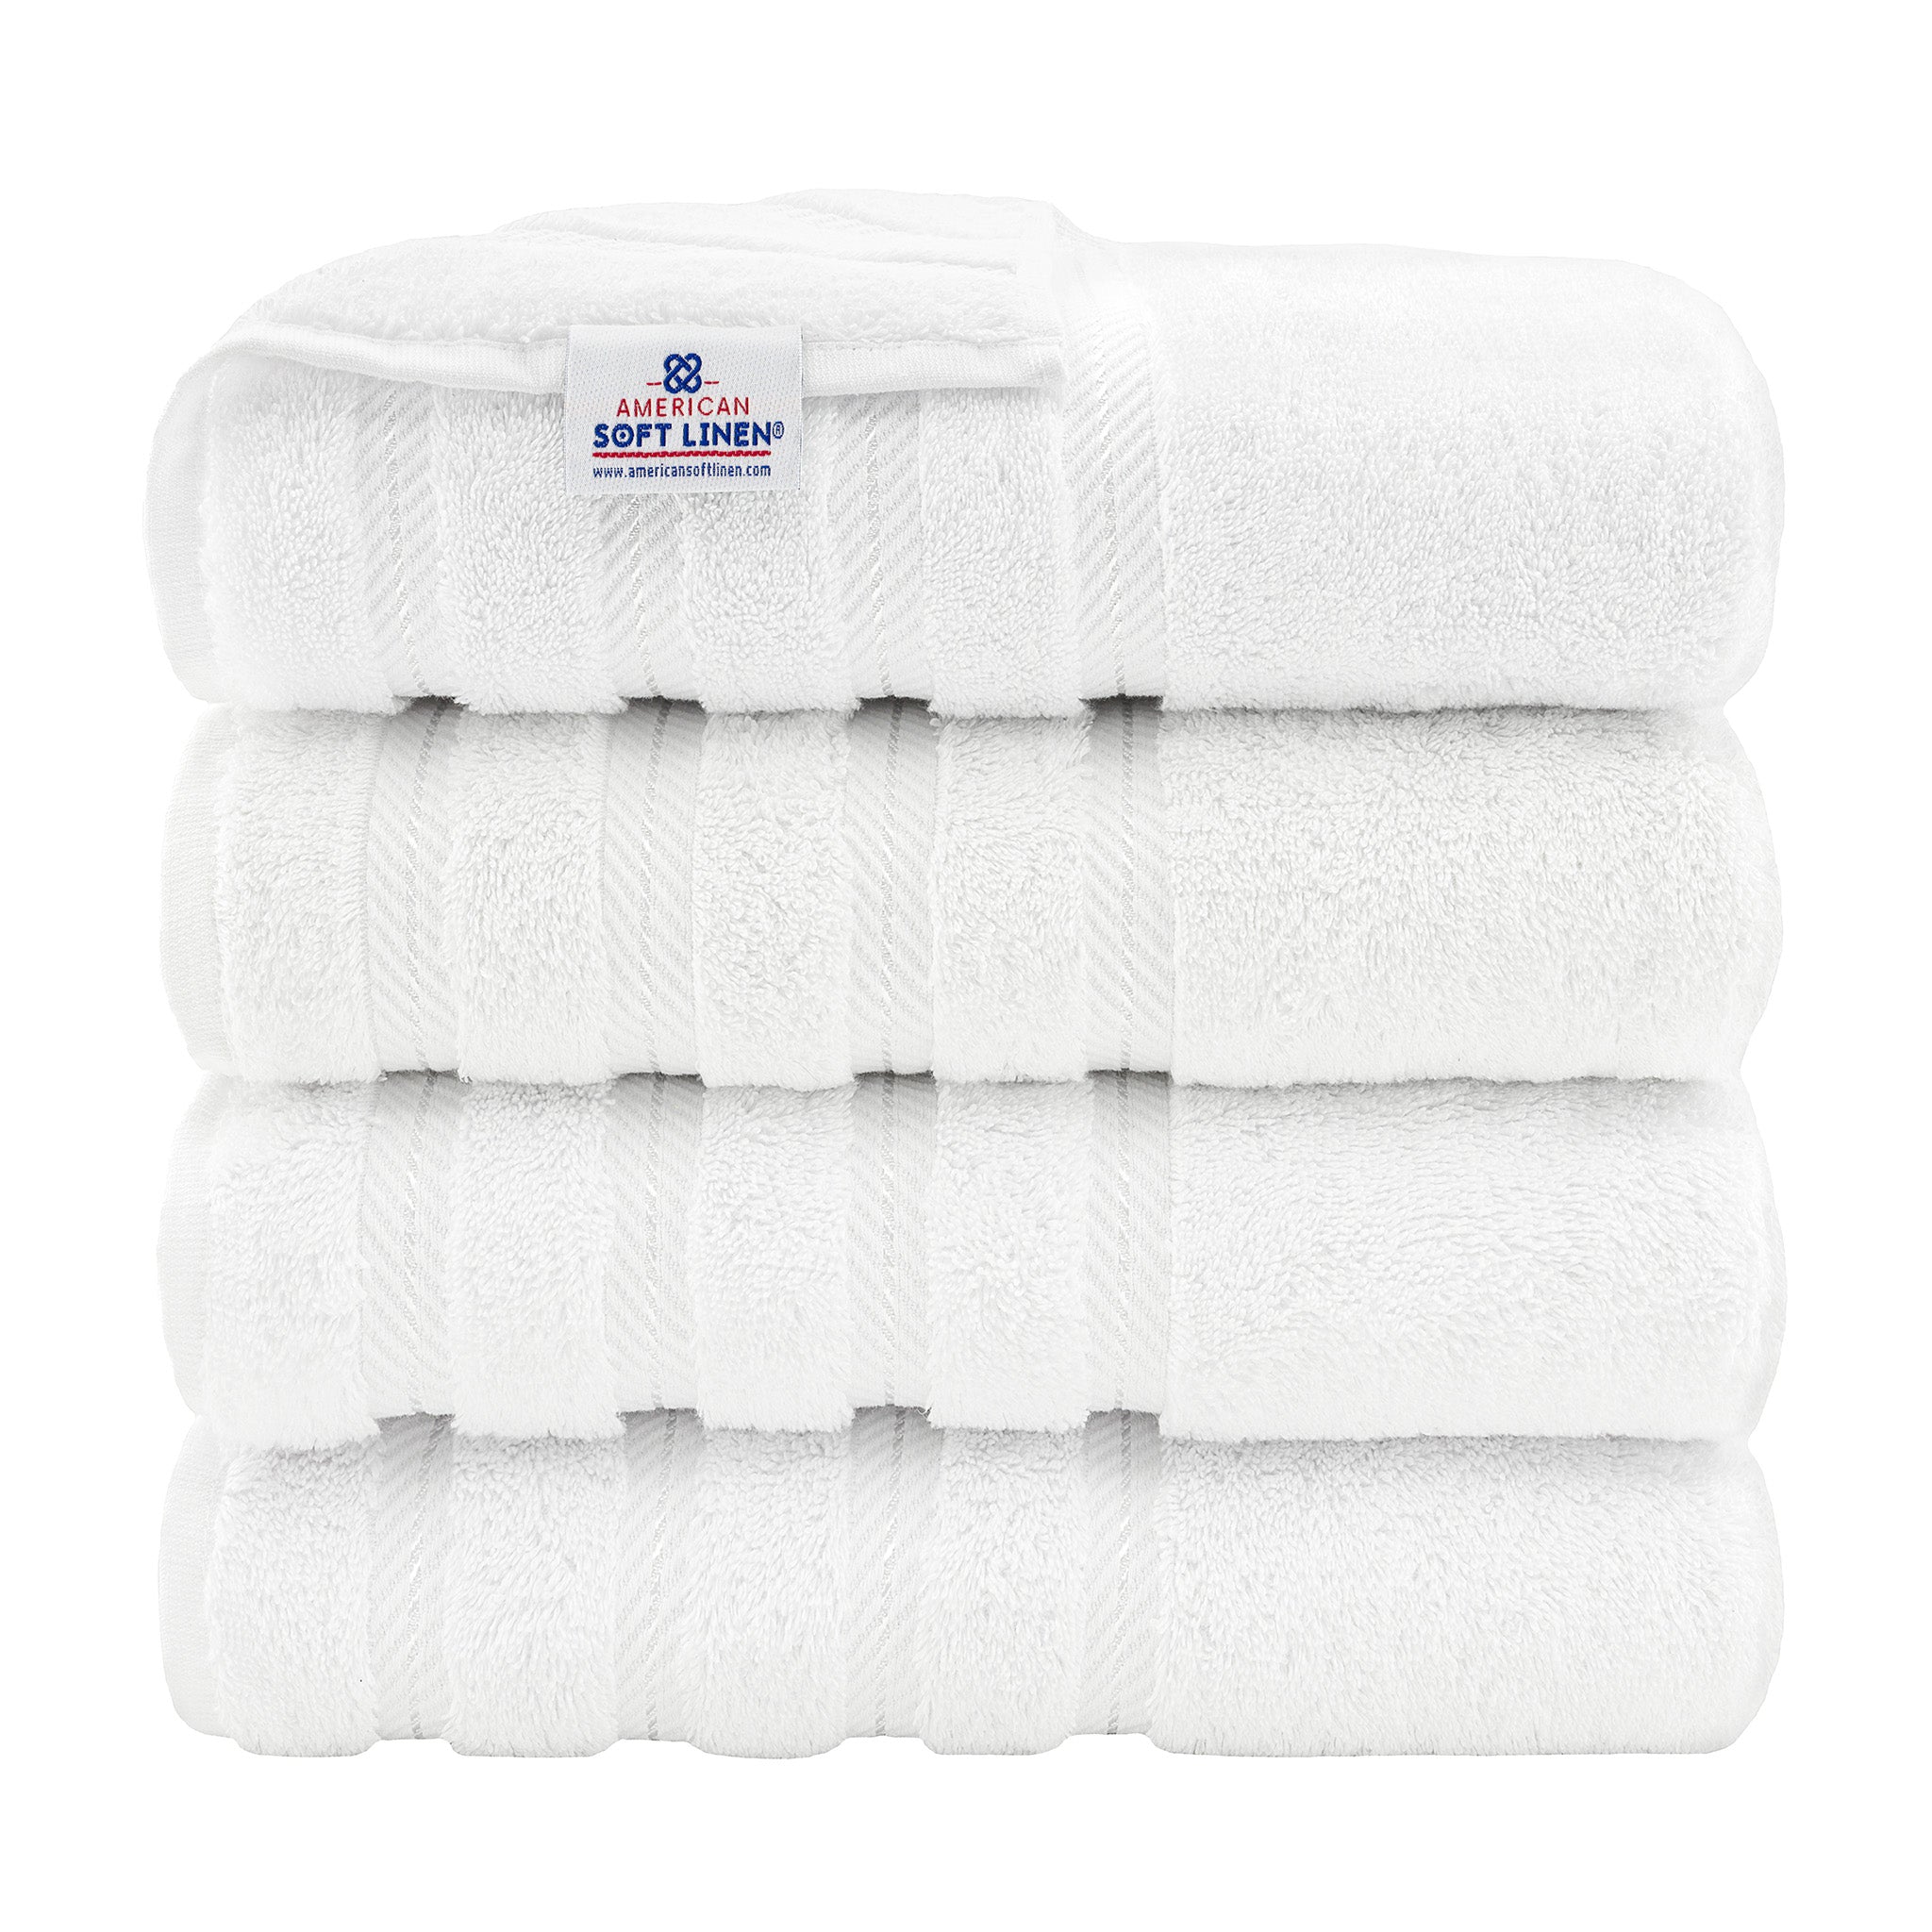 American Soft Linen 100% Turkish Cotton 4 Pack Bath Towel Set white-1